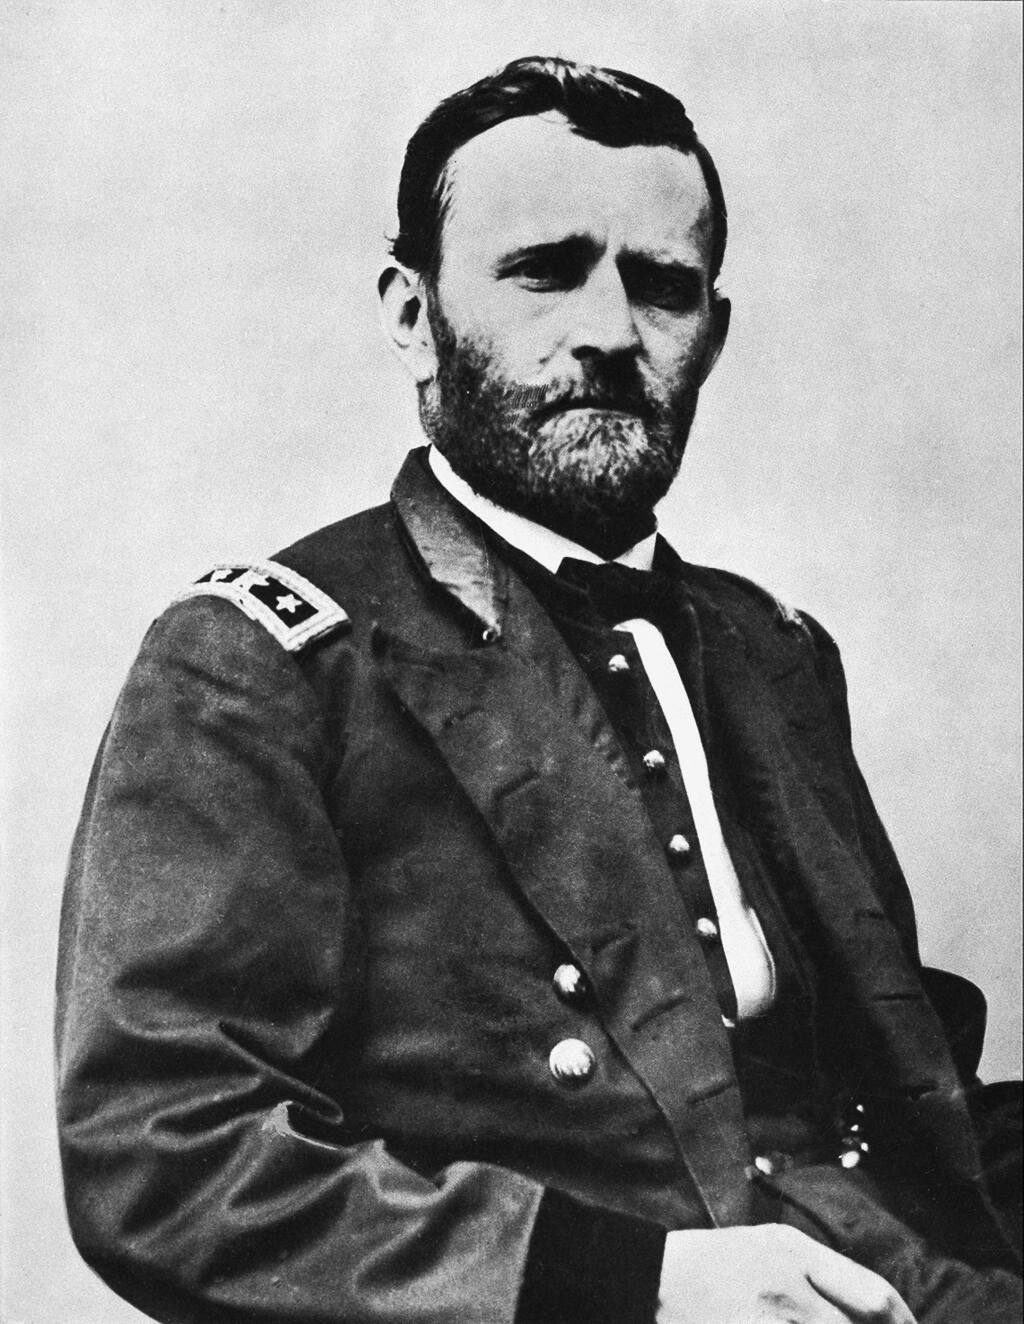 Ulysses S. Grant, Biography, Presidency, & History